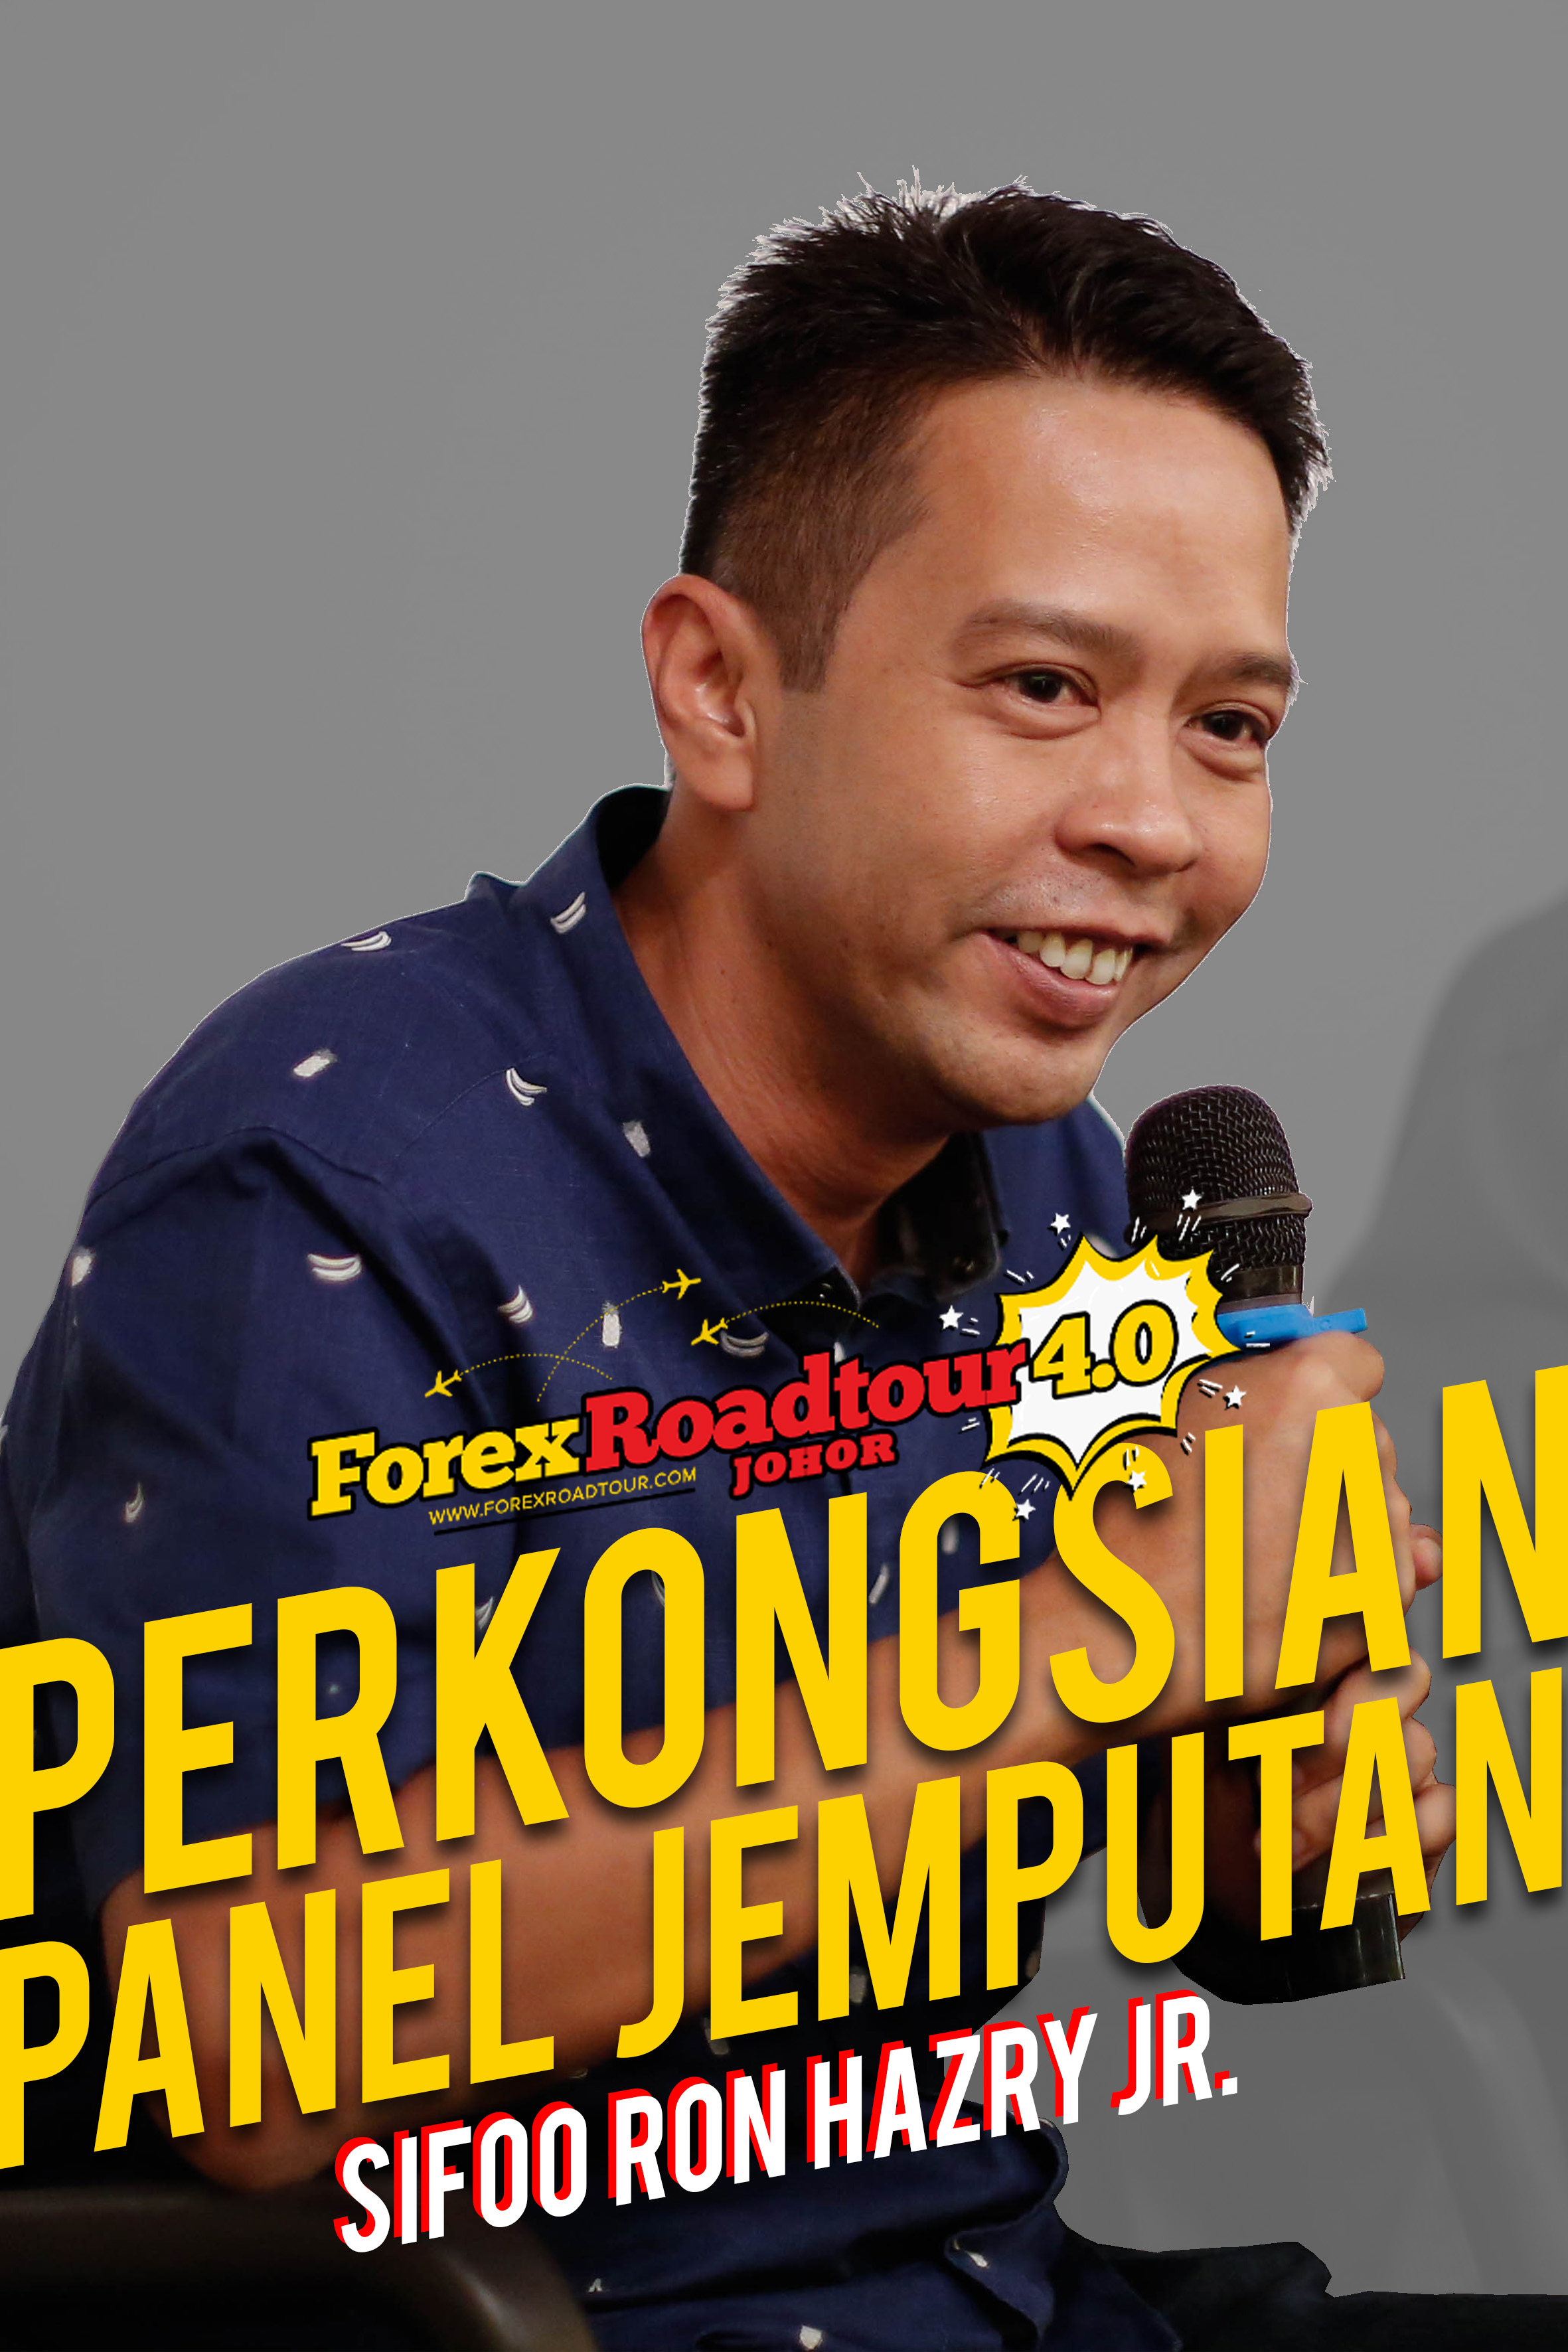 Sifoo Ron Hazry Jr. [Forex Road Tour 4.0 Johor]